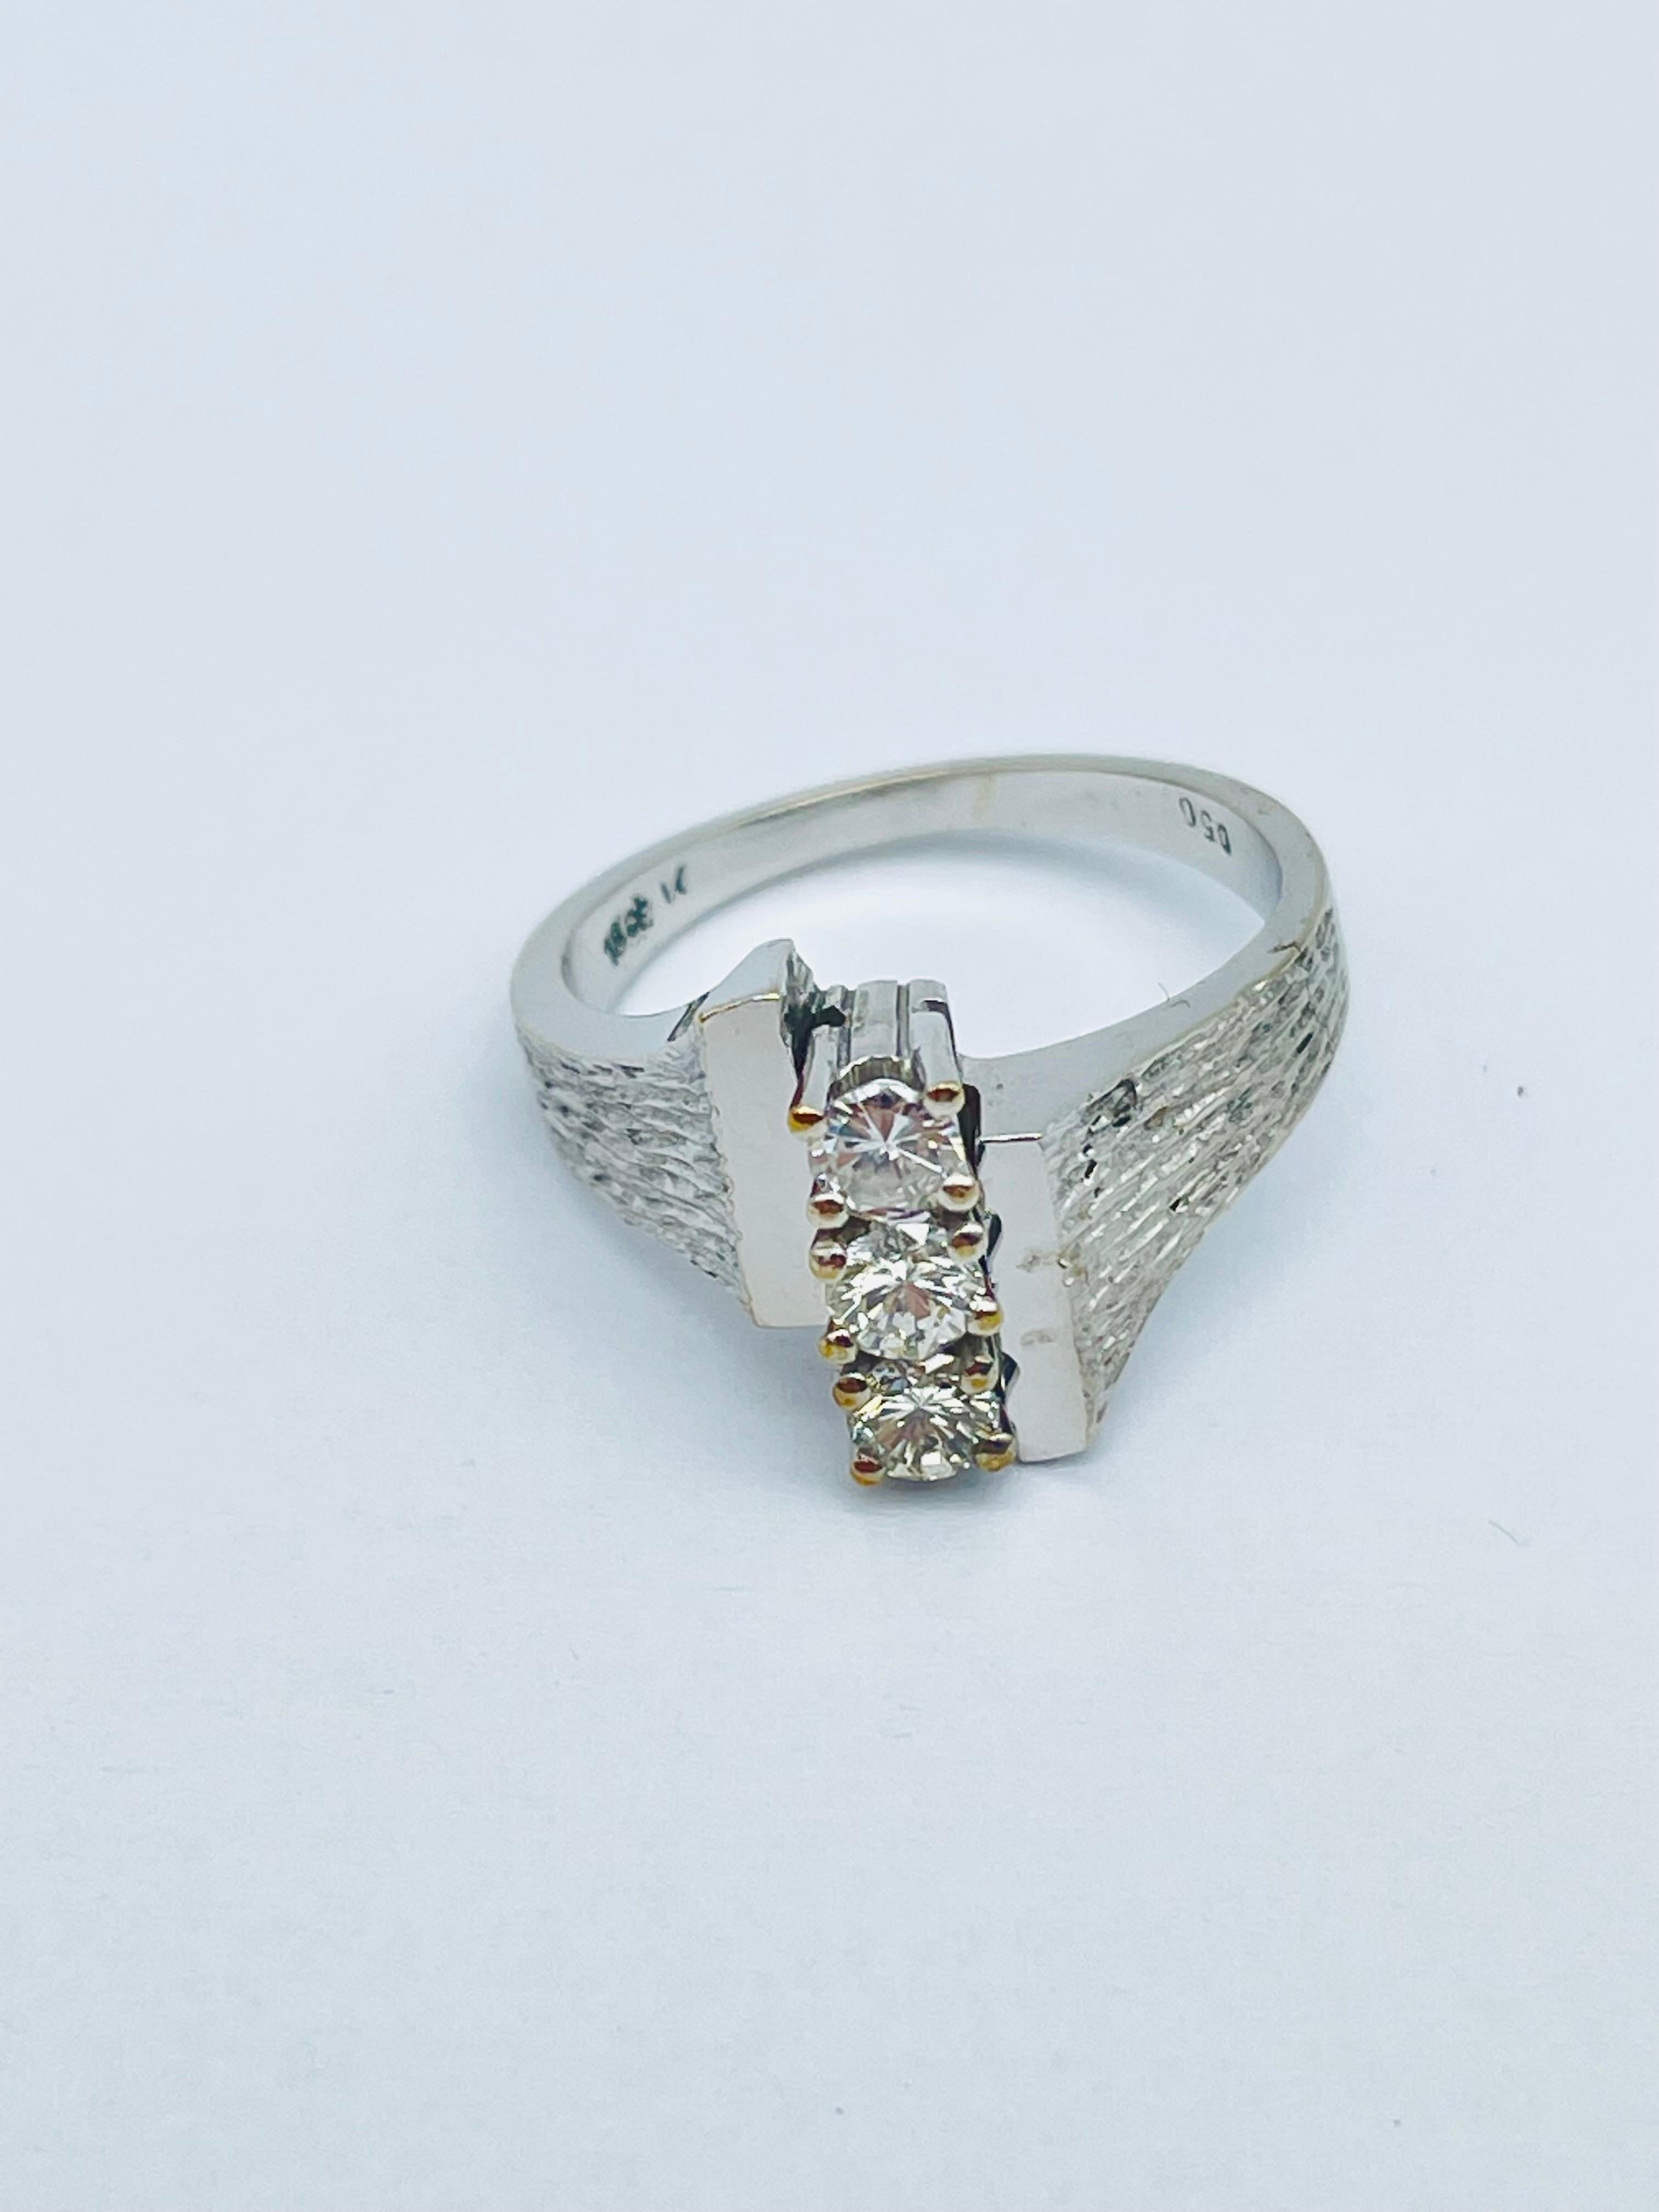 Brilliant Cut 18k White Gold Ring, Diamonds 0.50 Carat For Sale